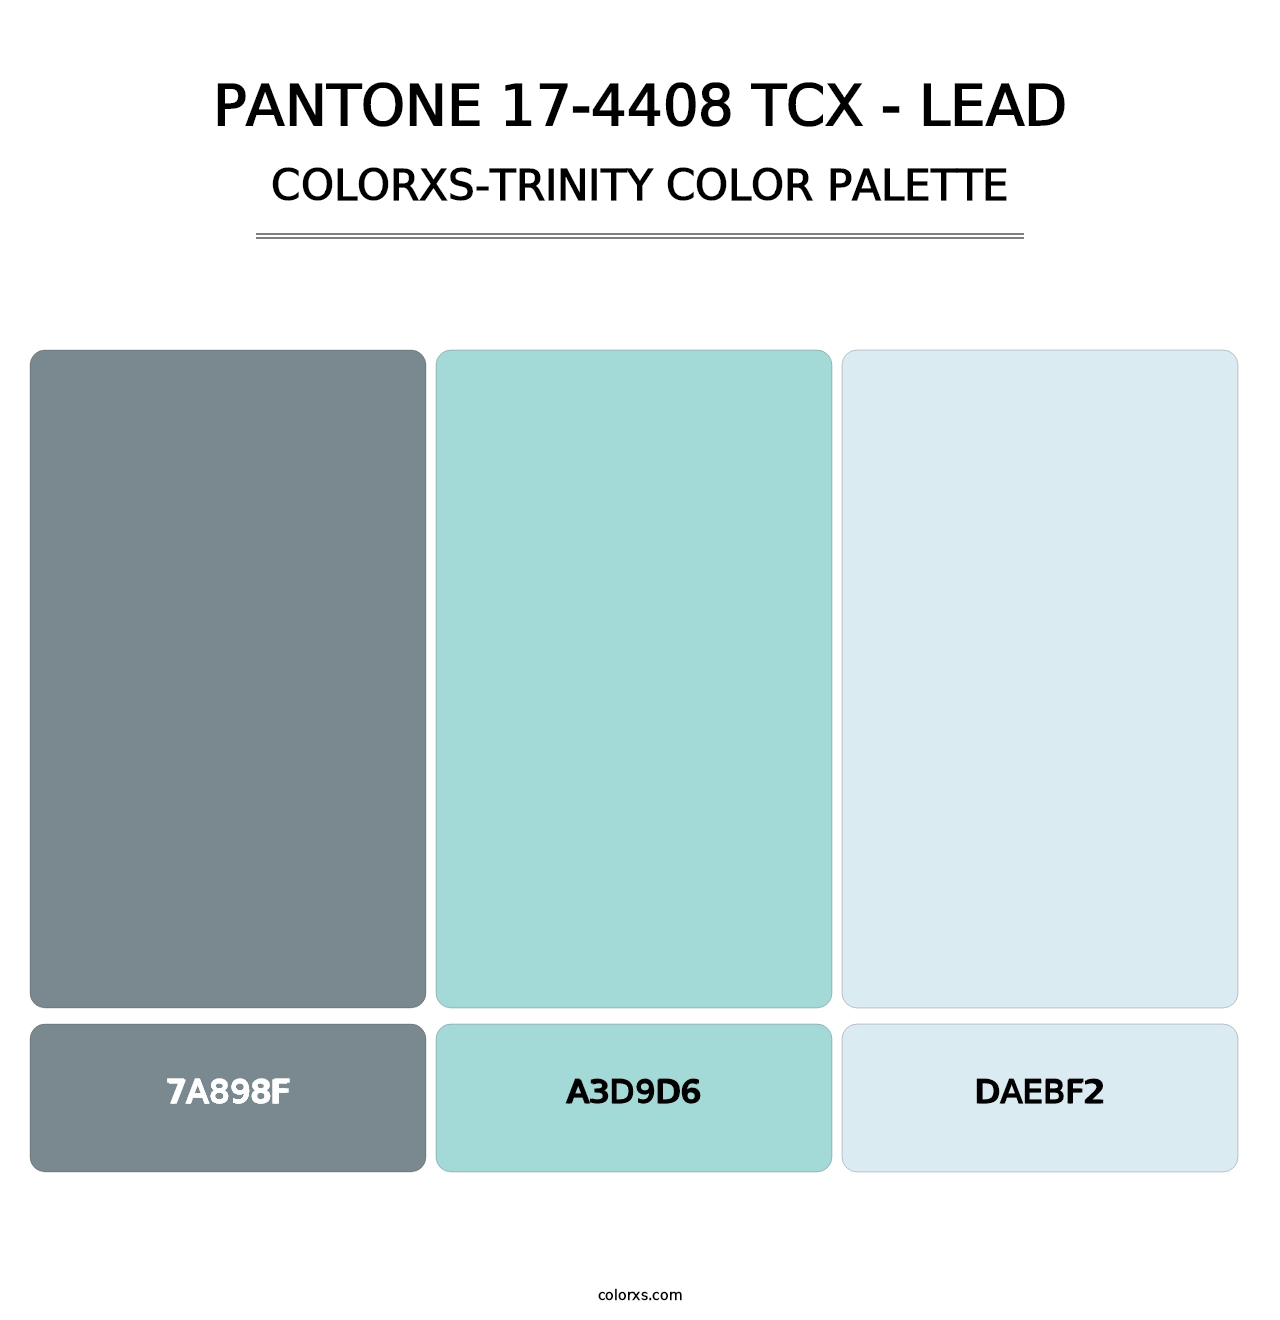 PANTONE 17-4408 TCX - Lead - Colorxs Trinity Palette